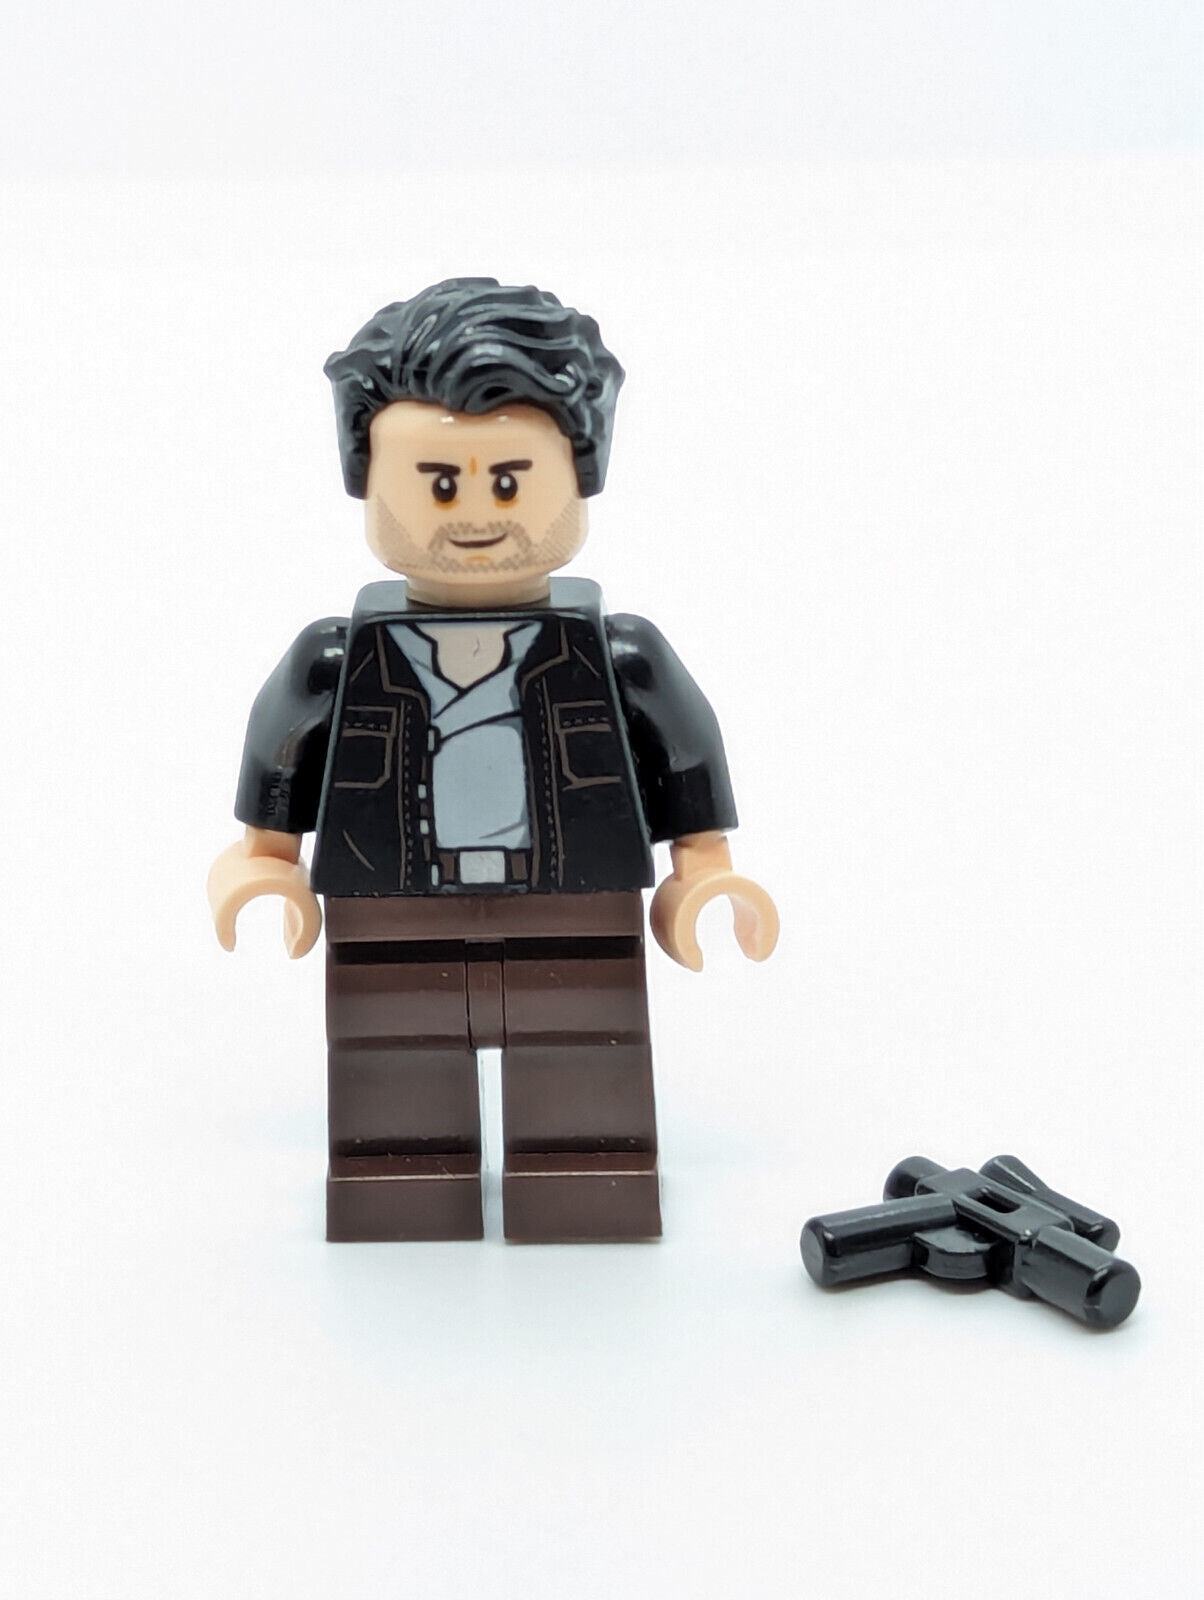 LEGO Star Wars Minifigure - Captain Poe Dameron sw0868 75189 Episode 8